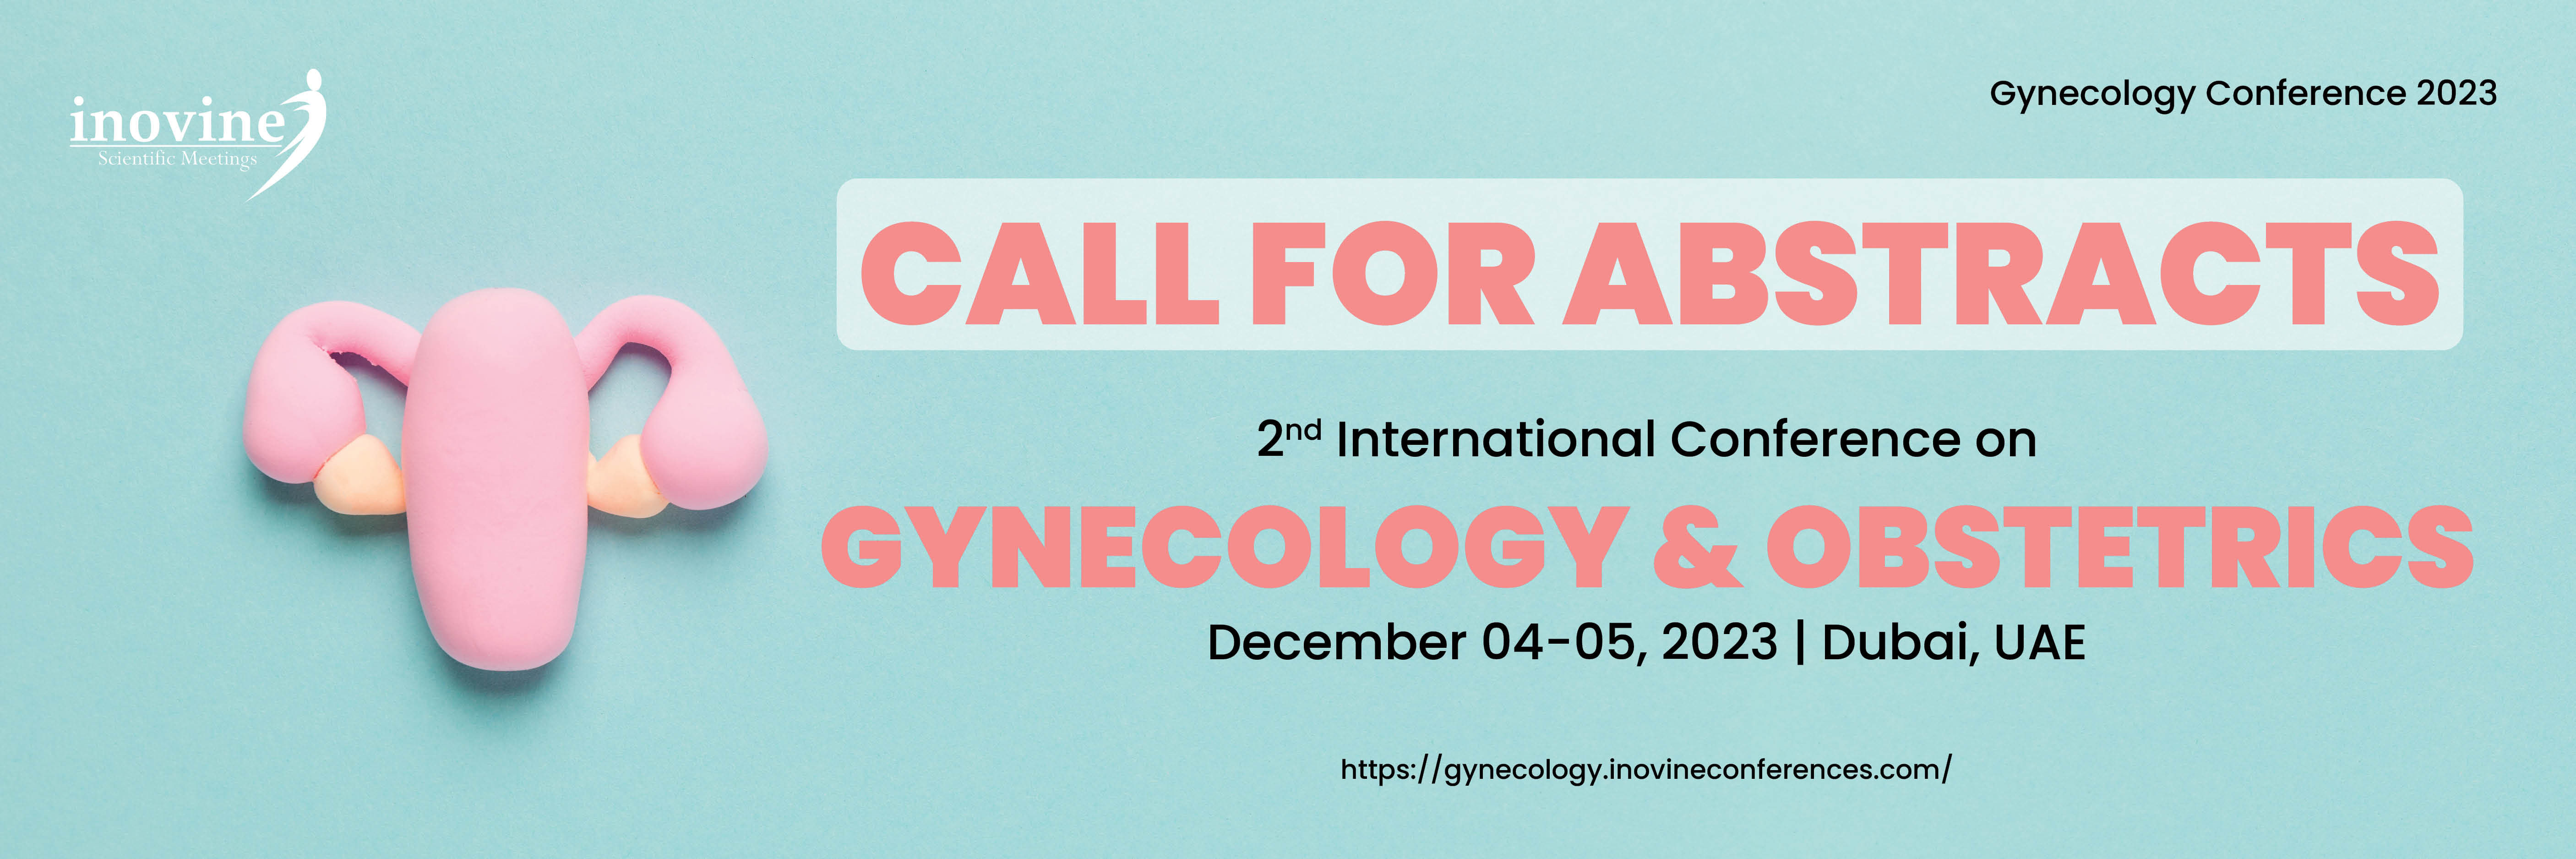 Gynecology Congress 2023